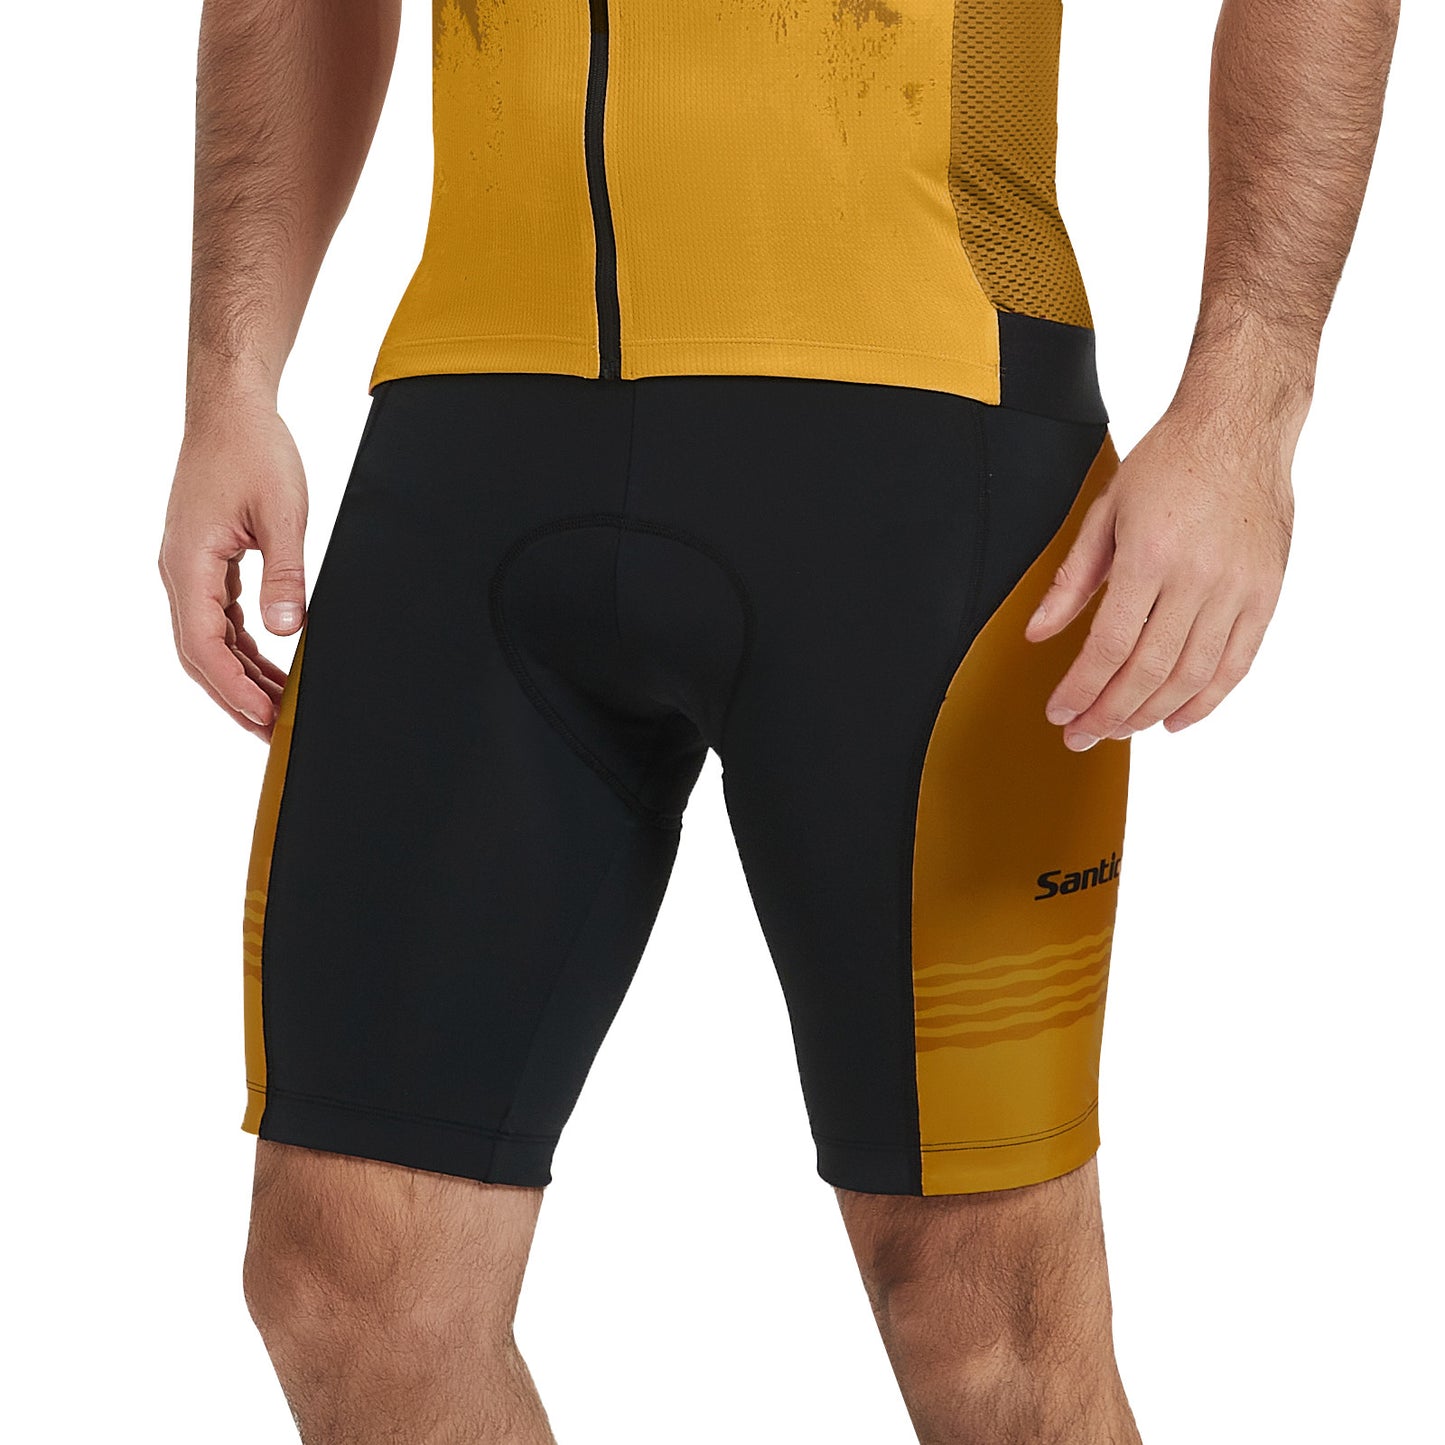 Santic Men's Cycling Jersey Short Sleeves Breathable Tan